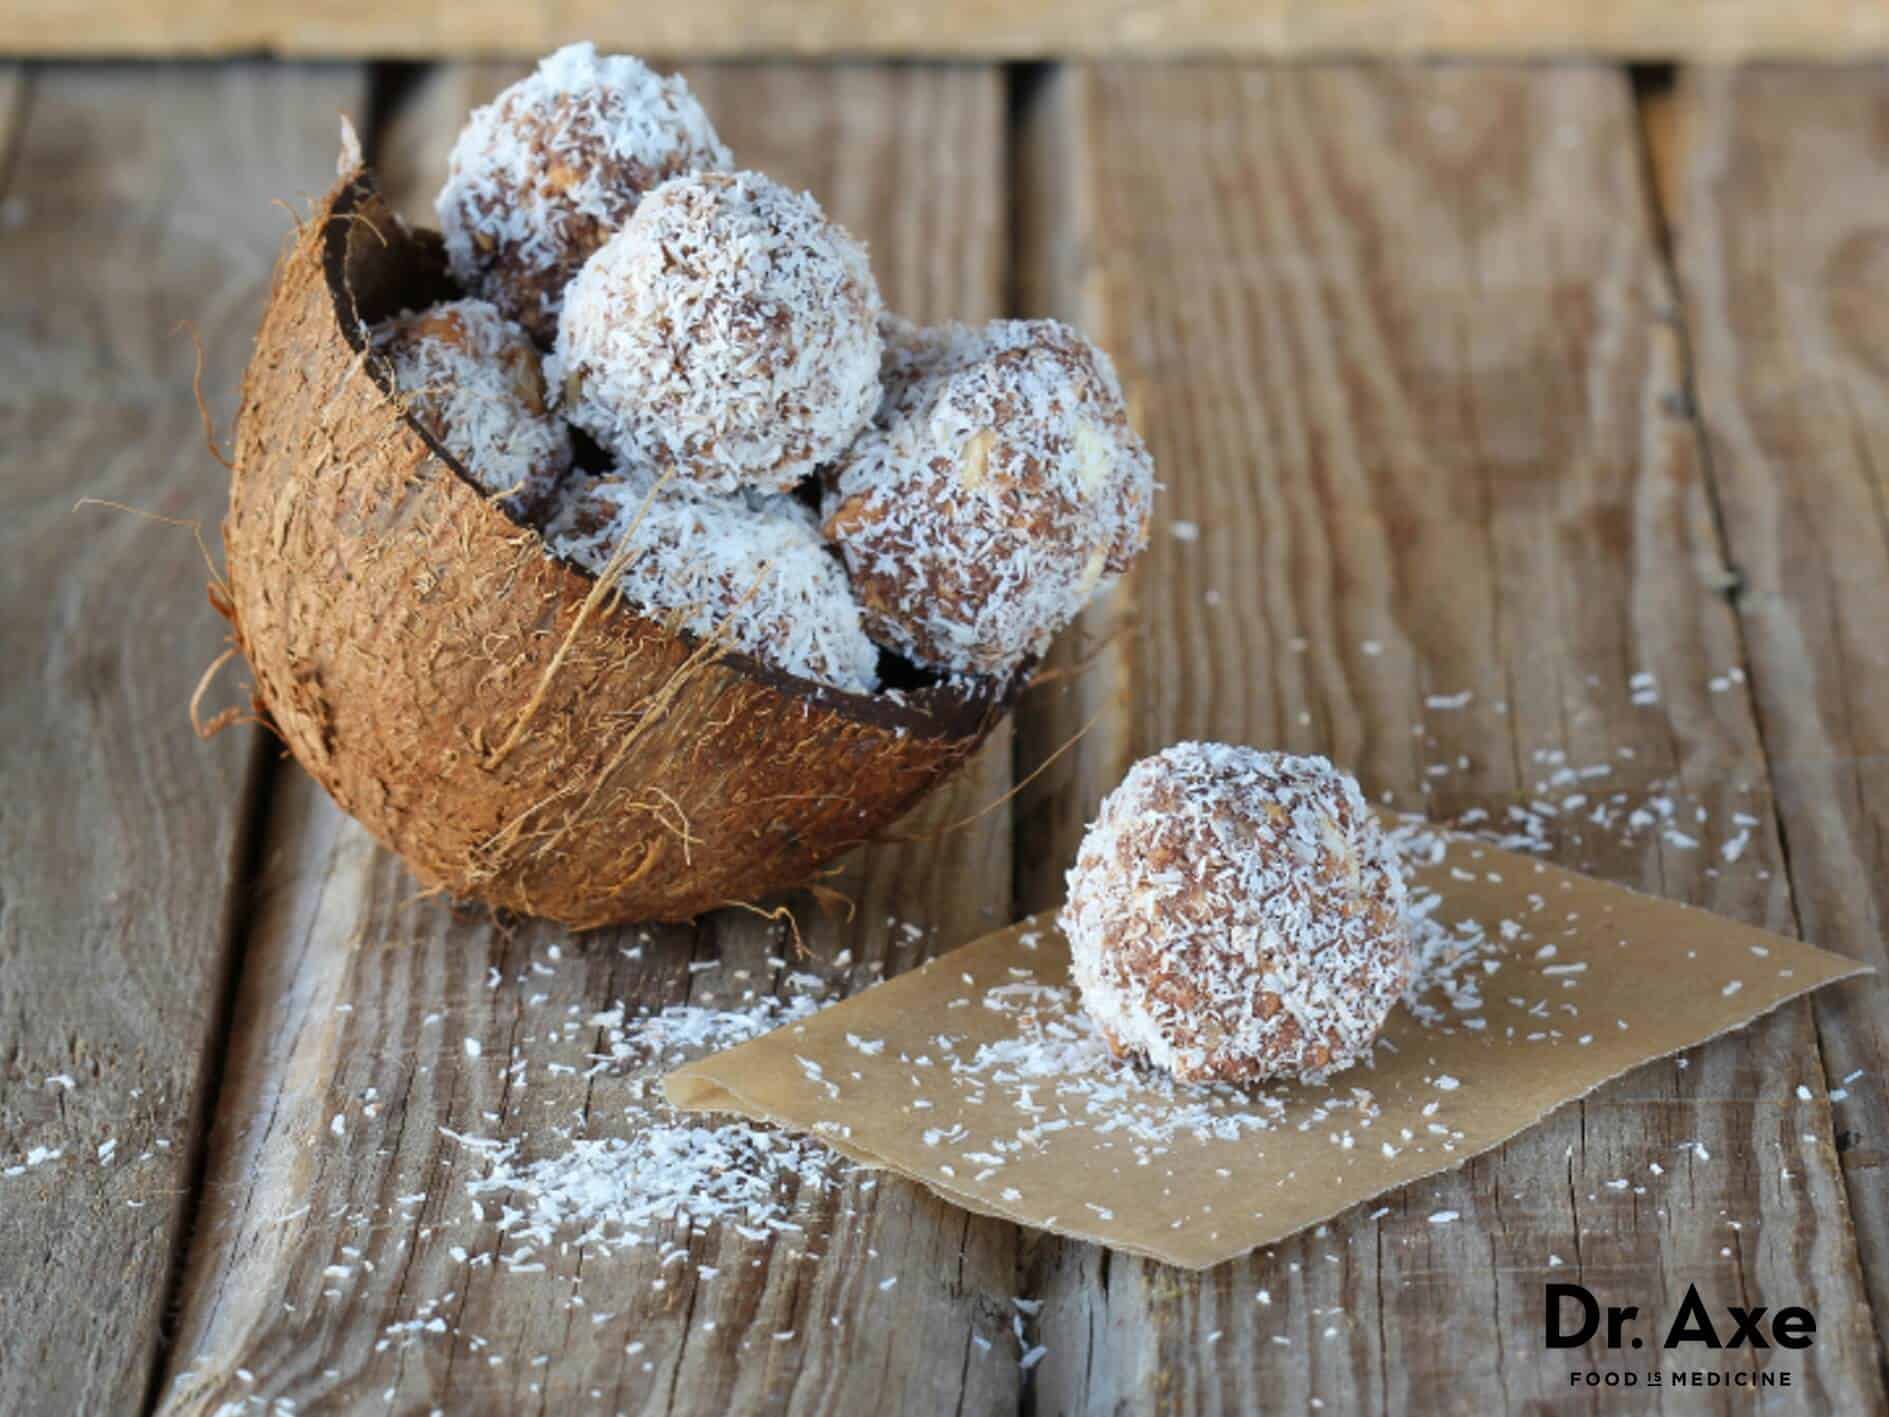 Date pecan coconut balls recipe - Dr. Axe